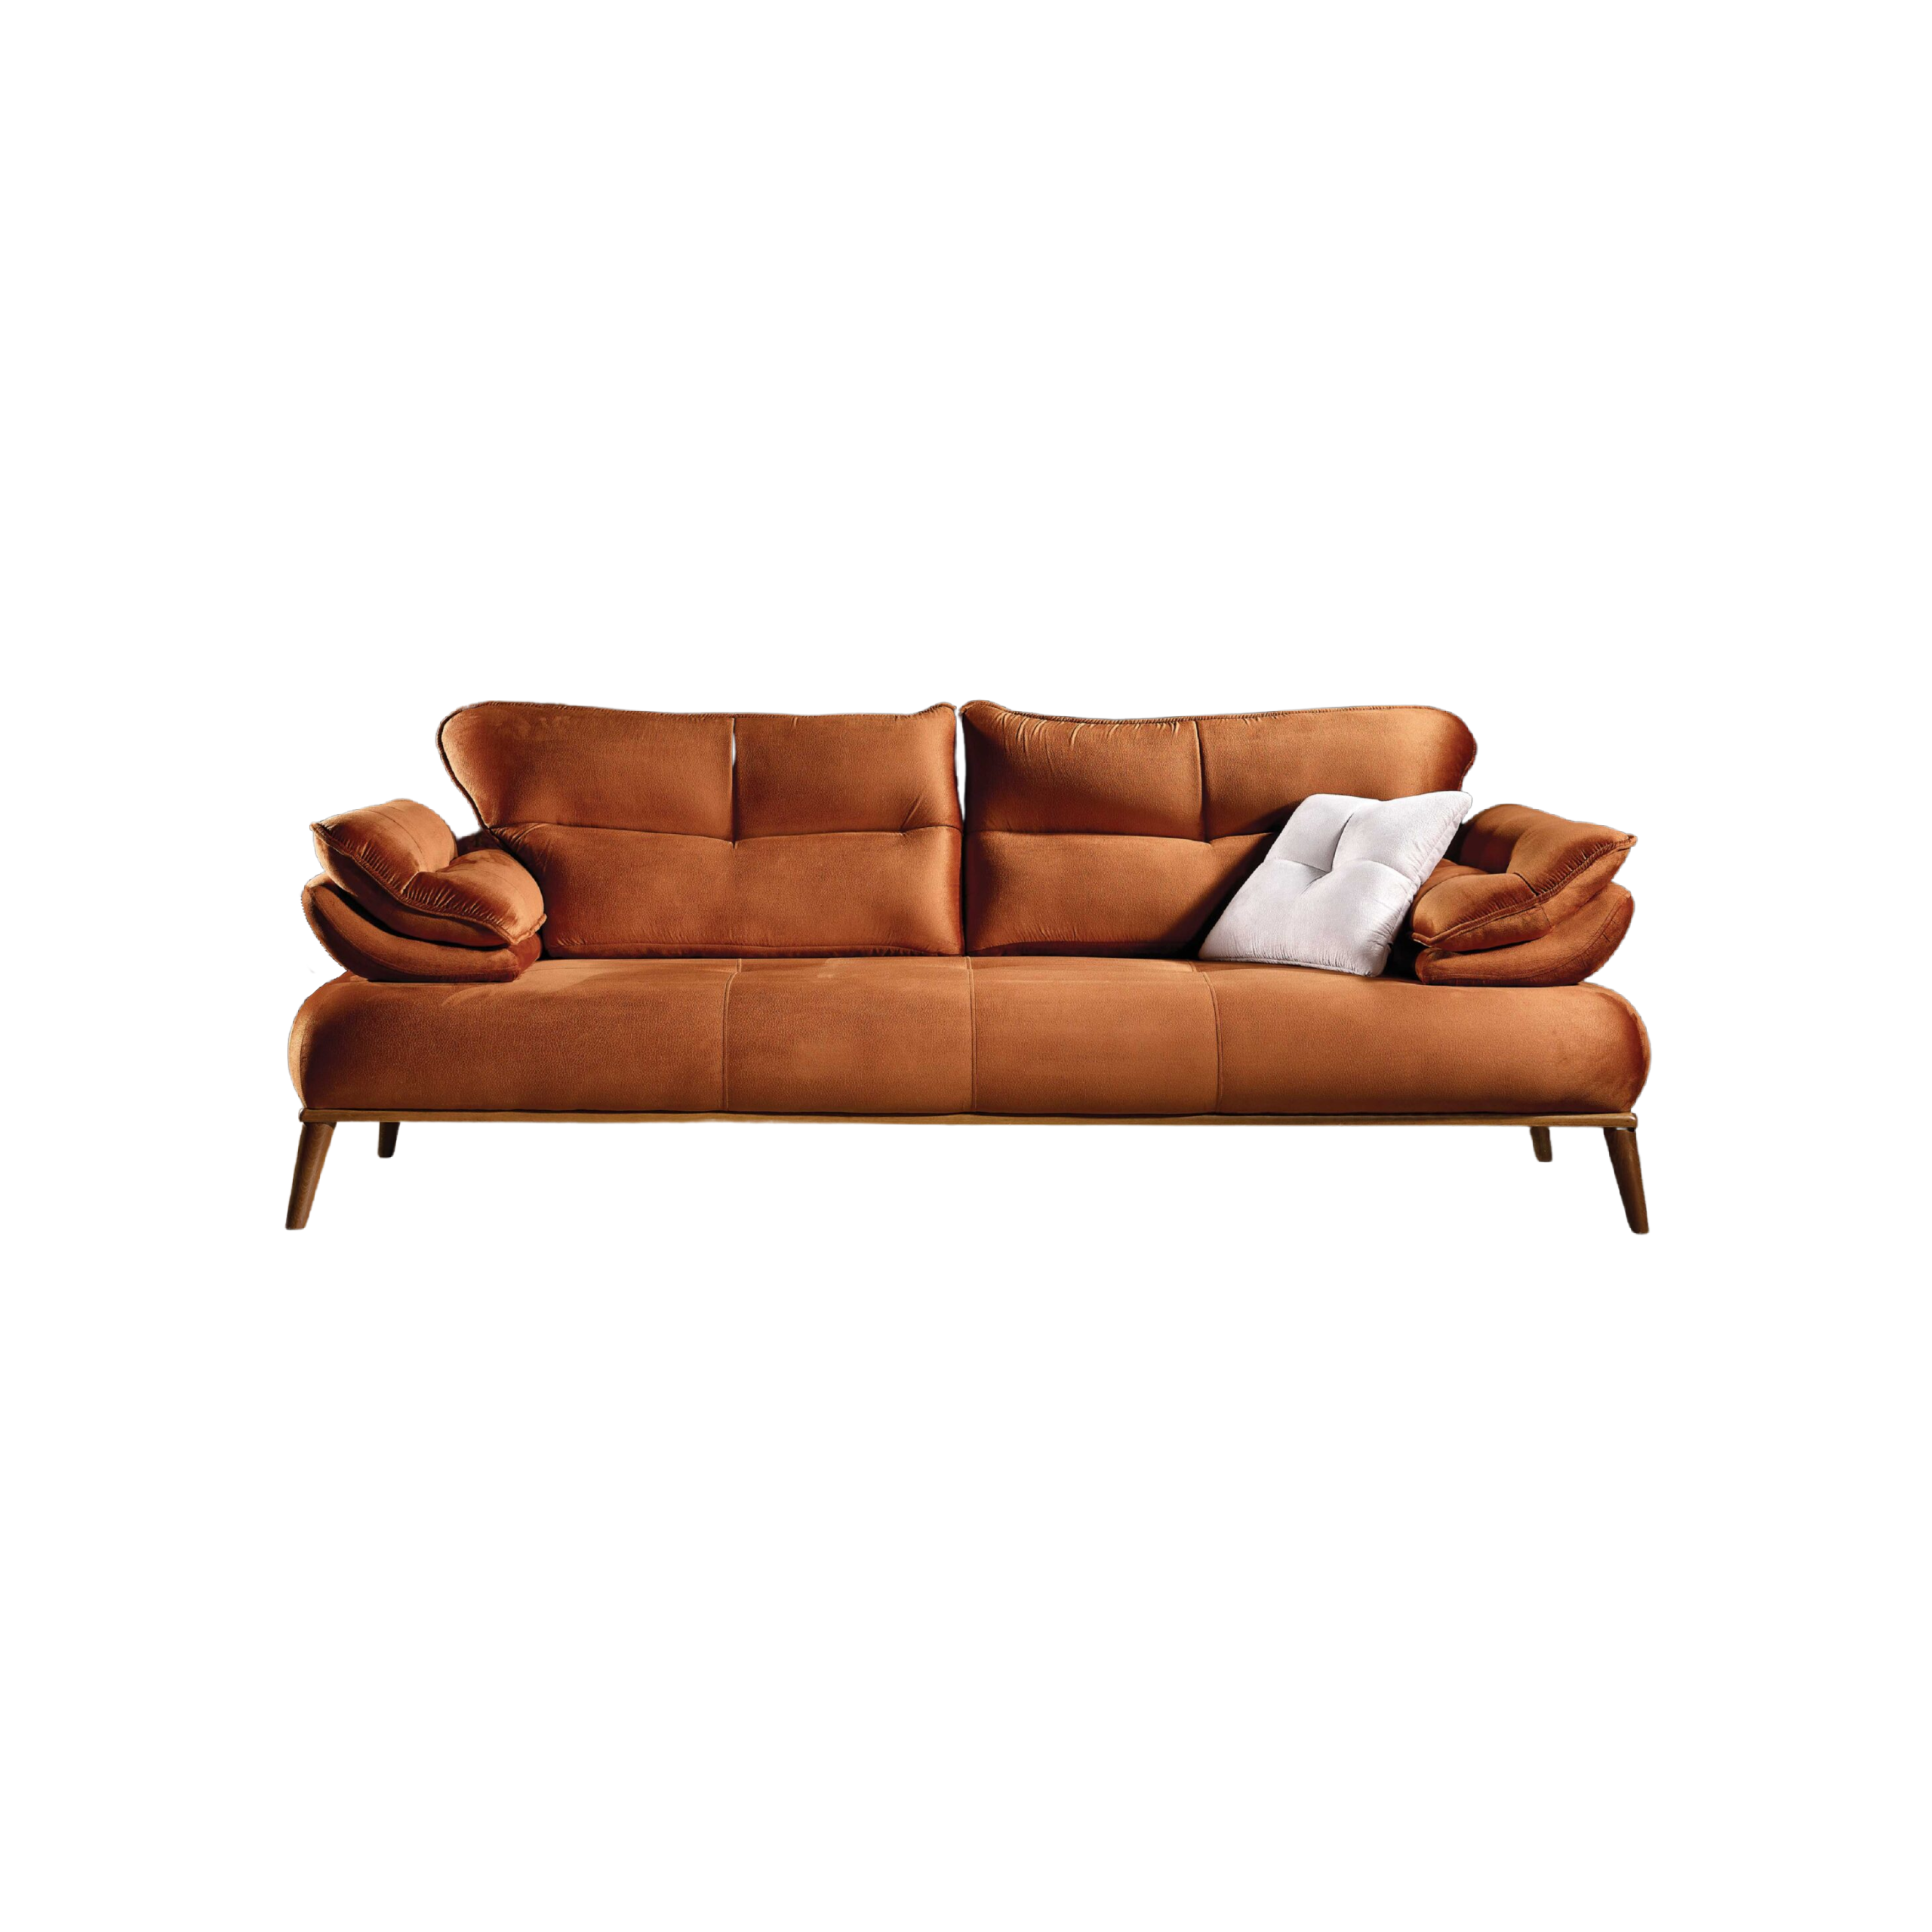 Tilsim 3 Seat Sleeper - Home Store Furniture